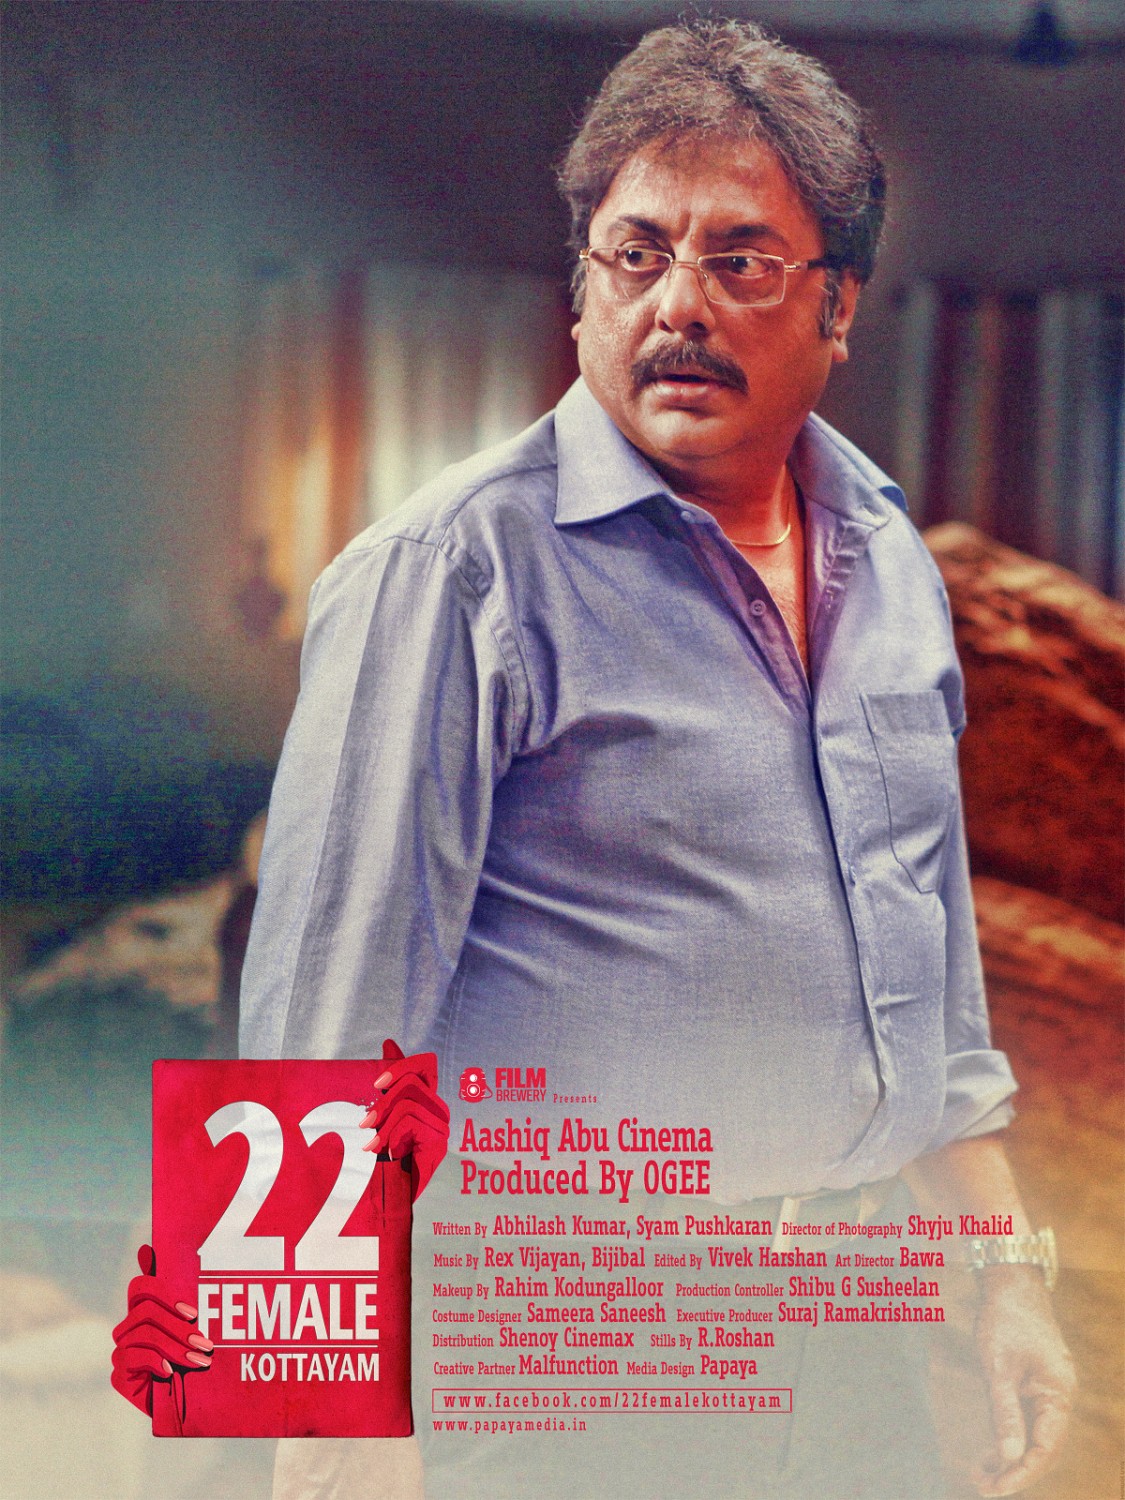 Extra Large Movie Poster Image for 22 Female Kottayam (#22 of 28)